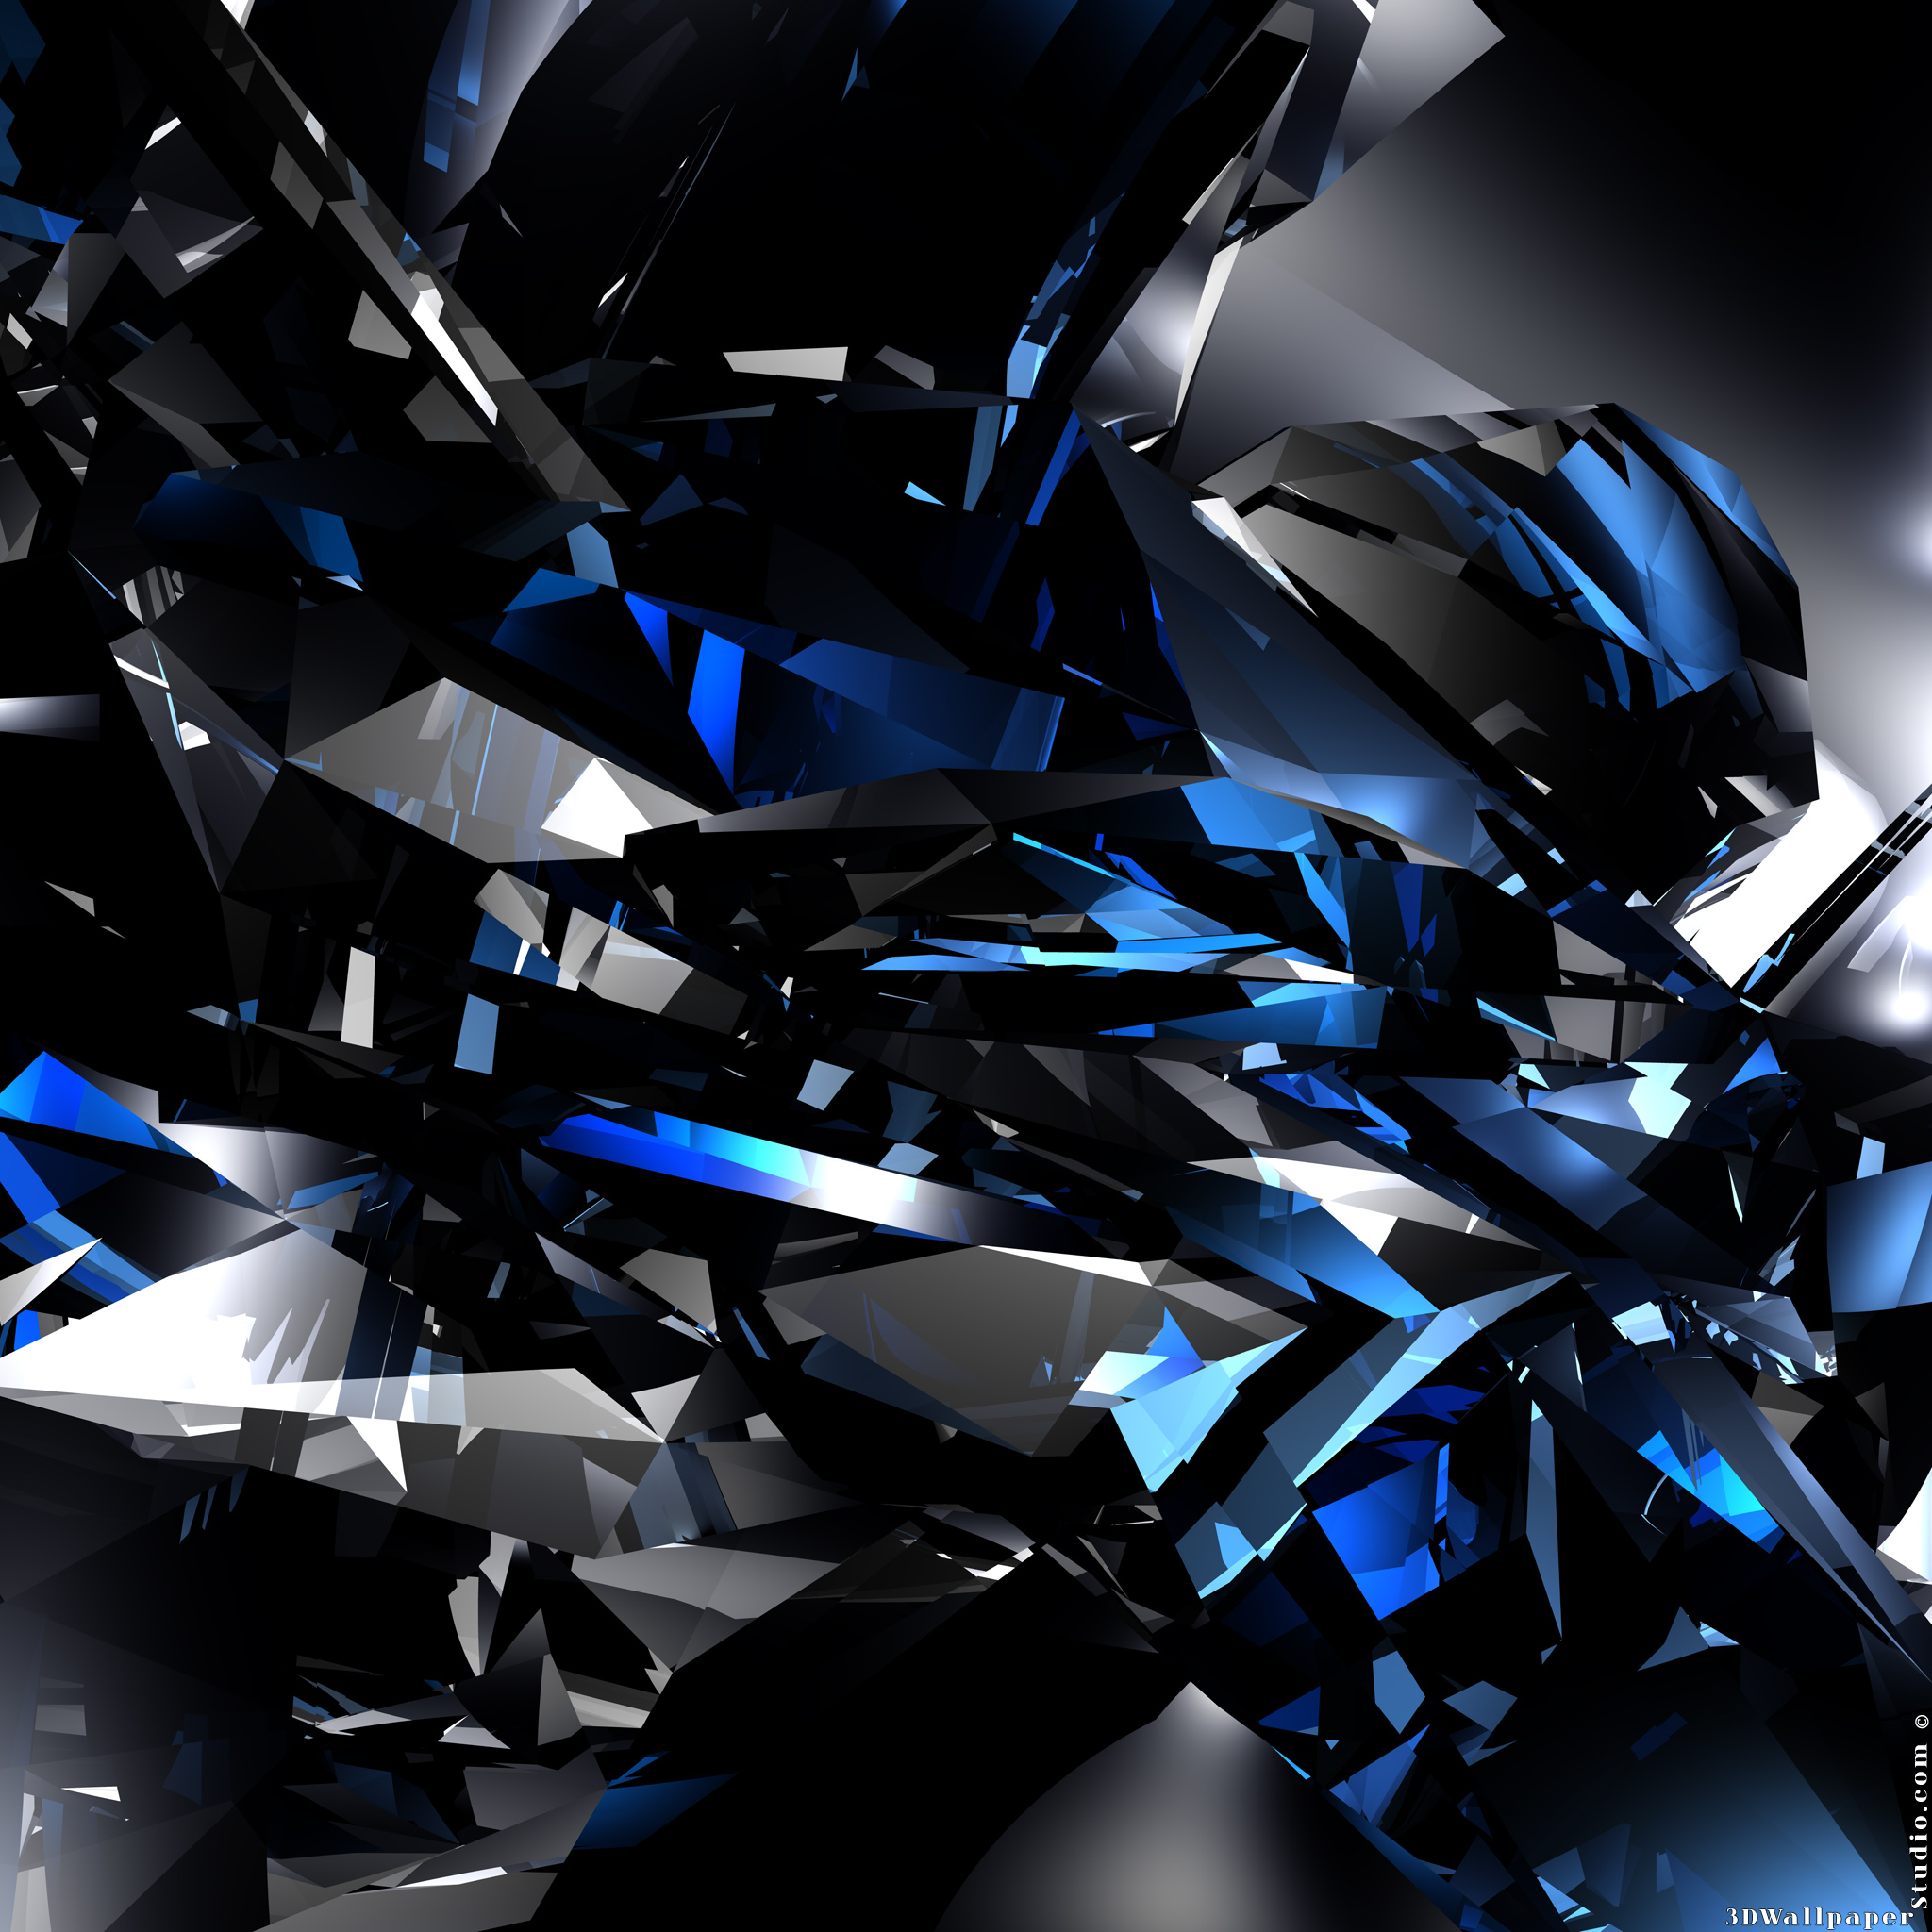 Free download 3D Wallpaper 3D blue crystals 2048 x 2048 [2048x2048] for